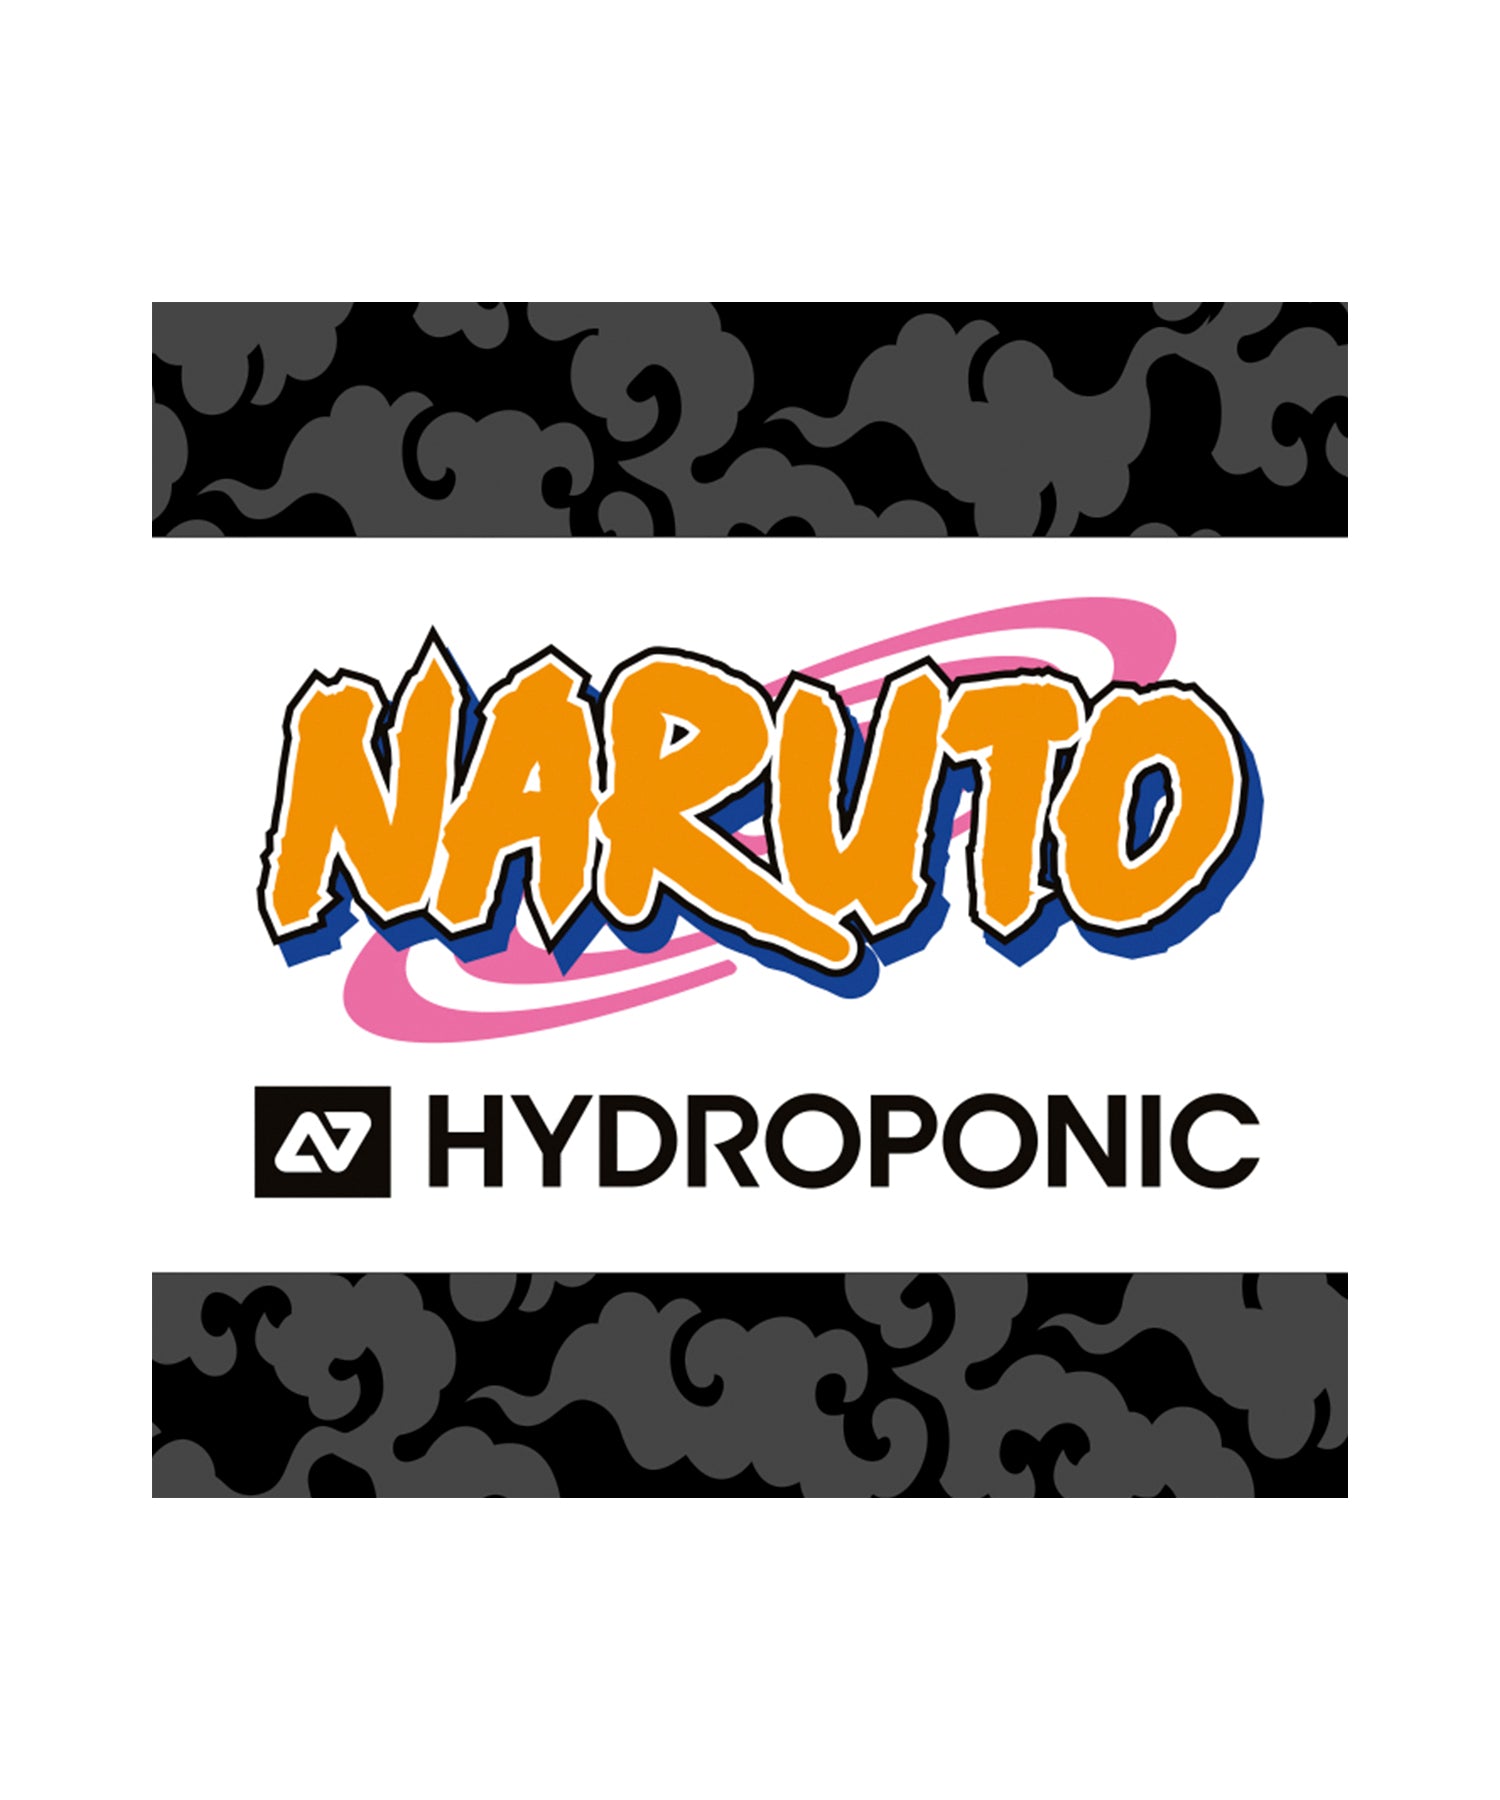 tabla-de-skate-hydroponic-naruto-kakashi-colaboracion-ocn-el-famoso-manga-7-laminas-de-arce-totalmente-profesional